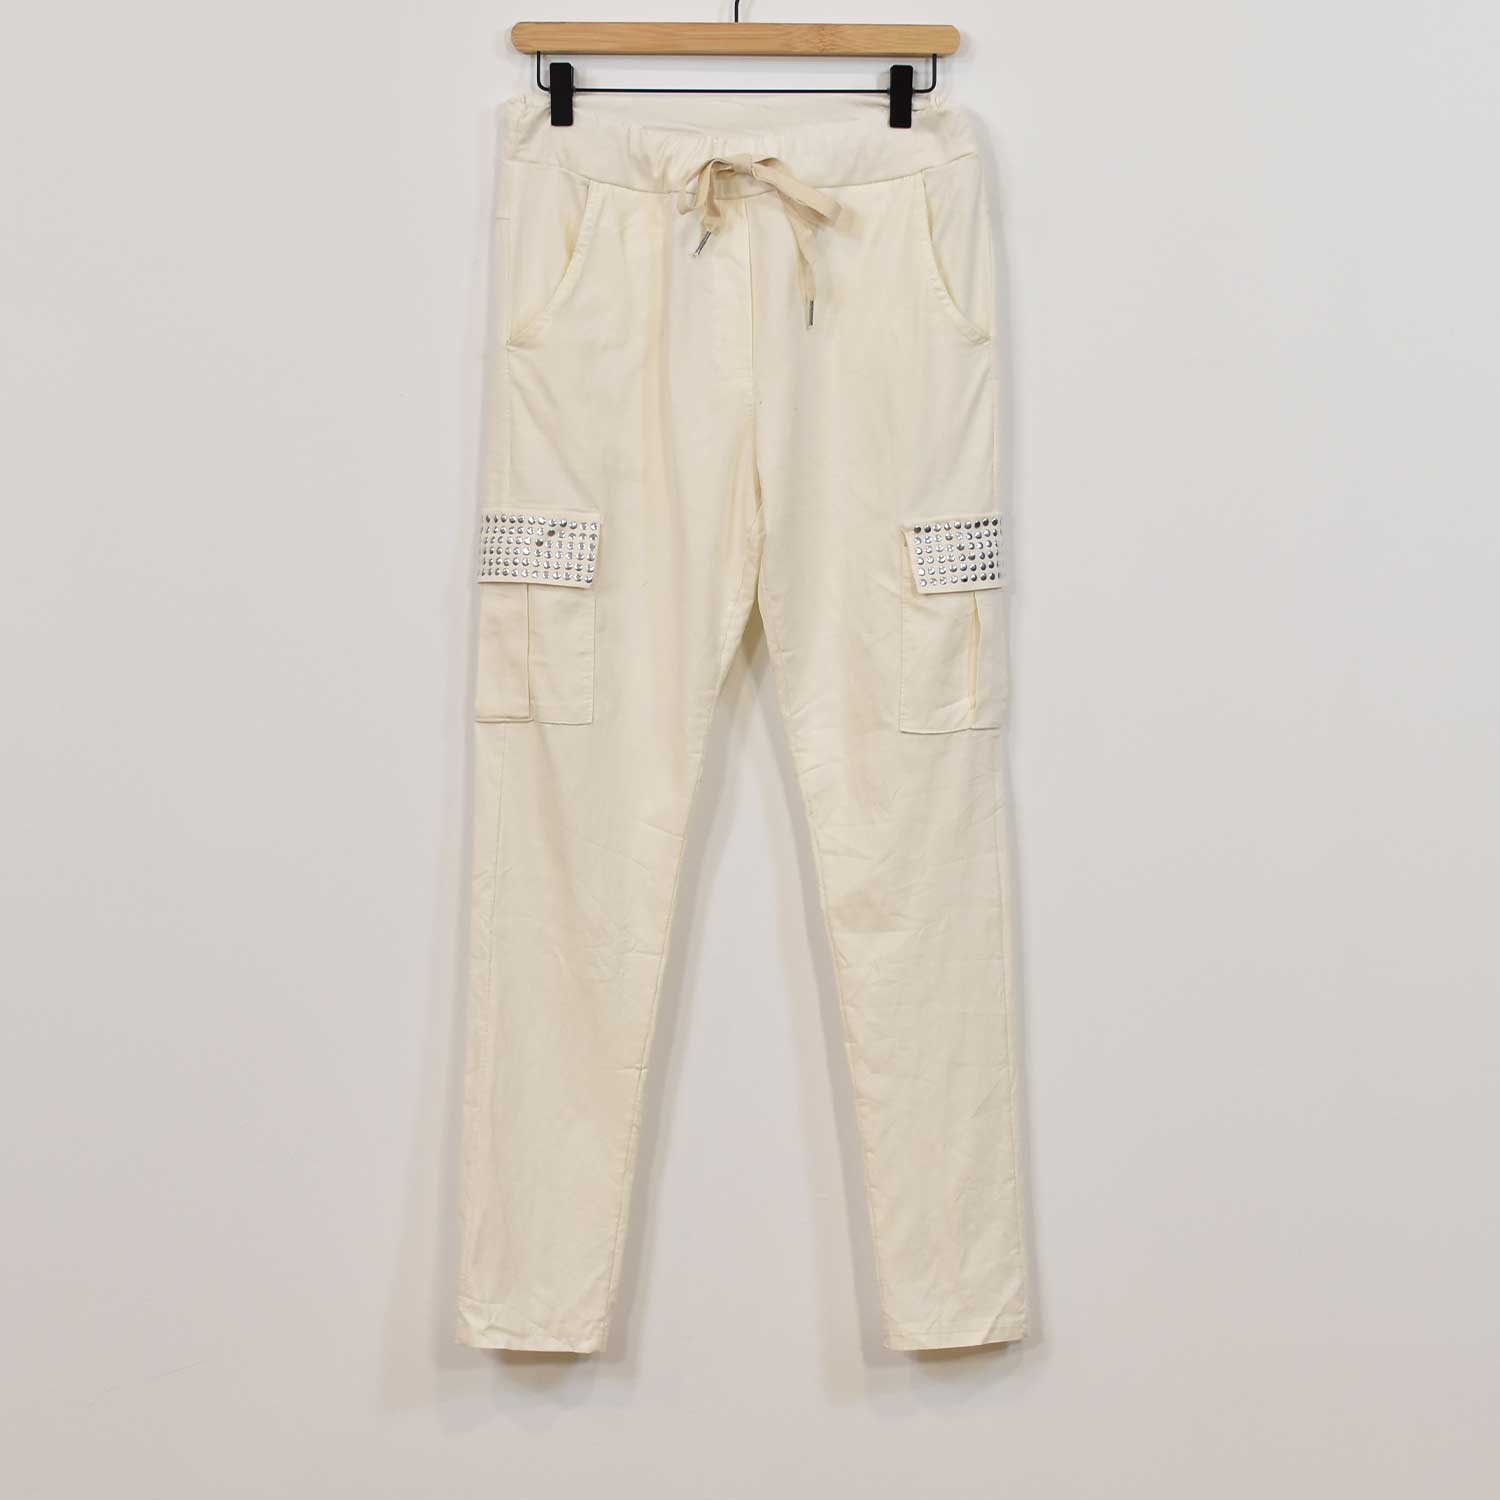 Pantalon cargo clous blanc